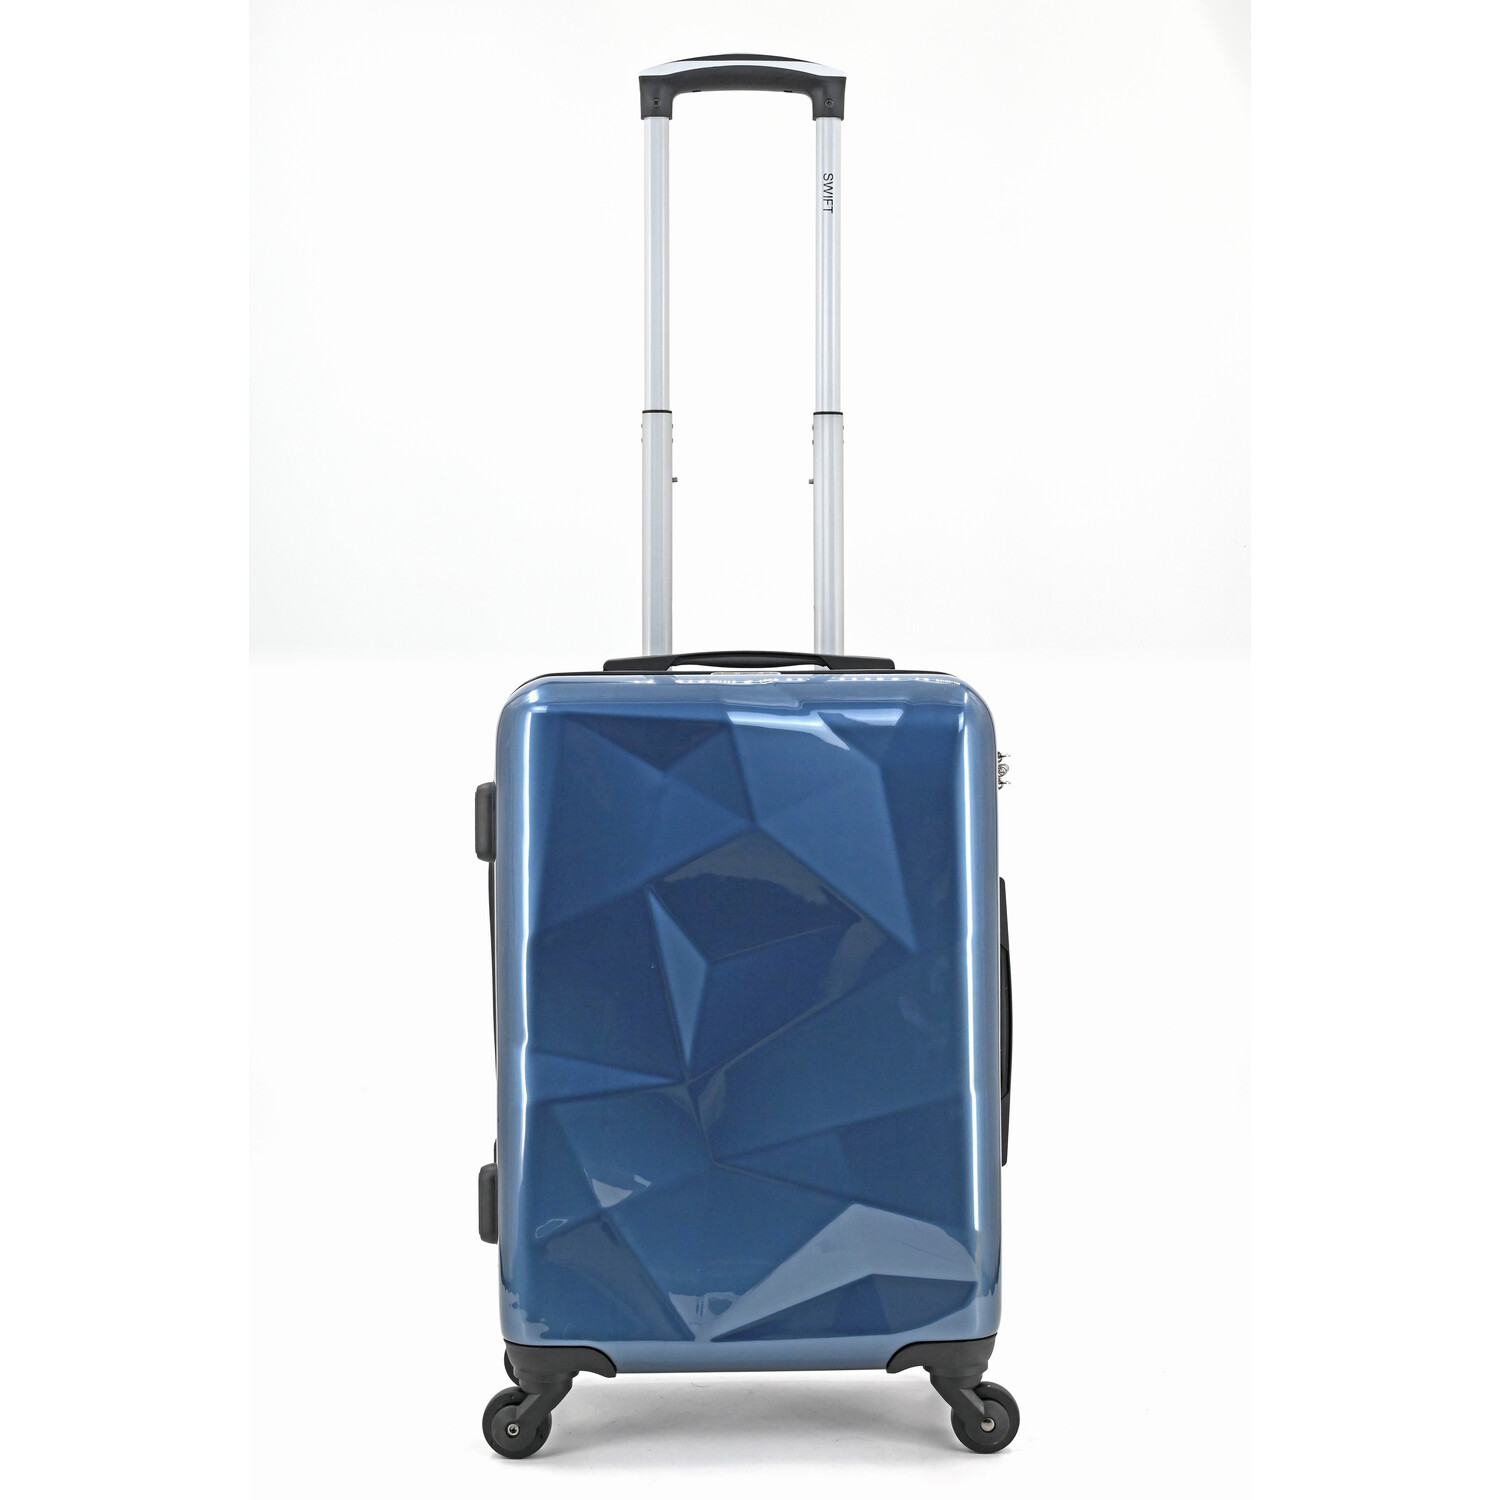 Swift Comet Suitcase - Blue / Cabin Case Image 1